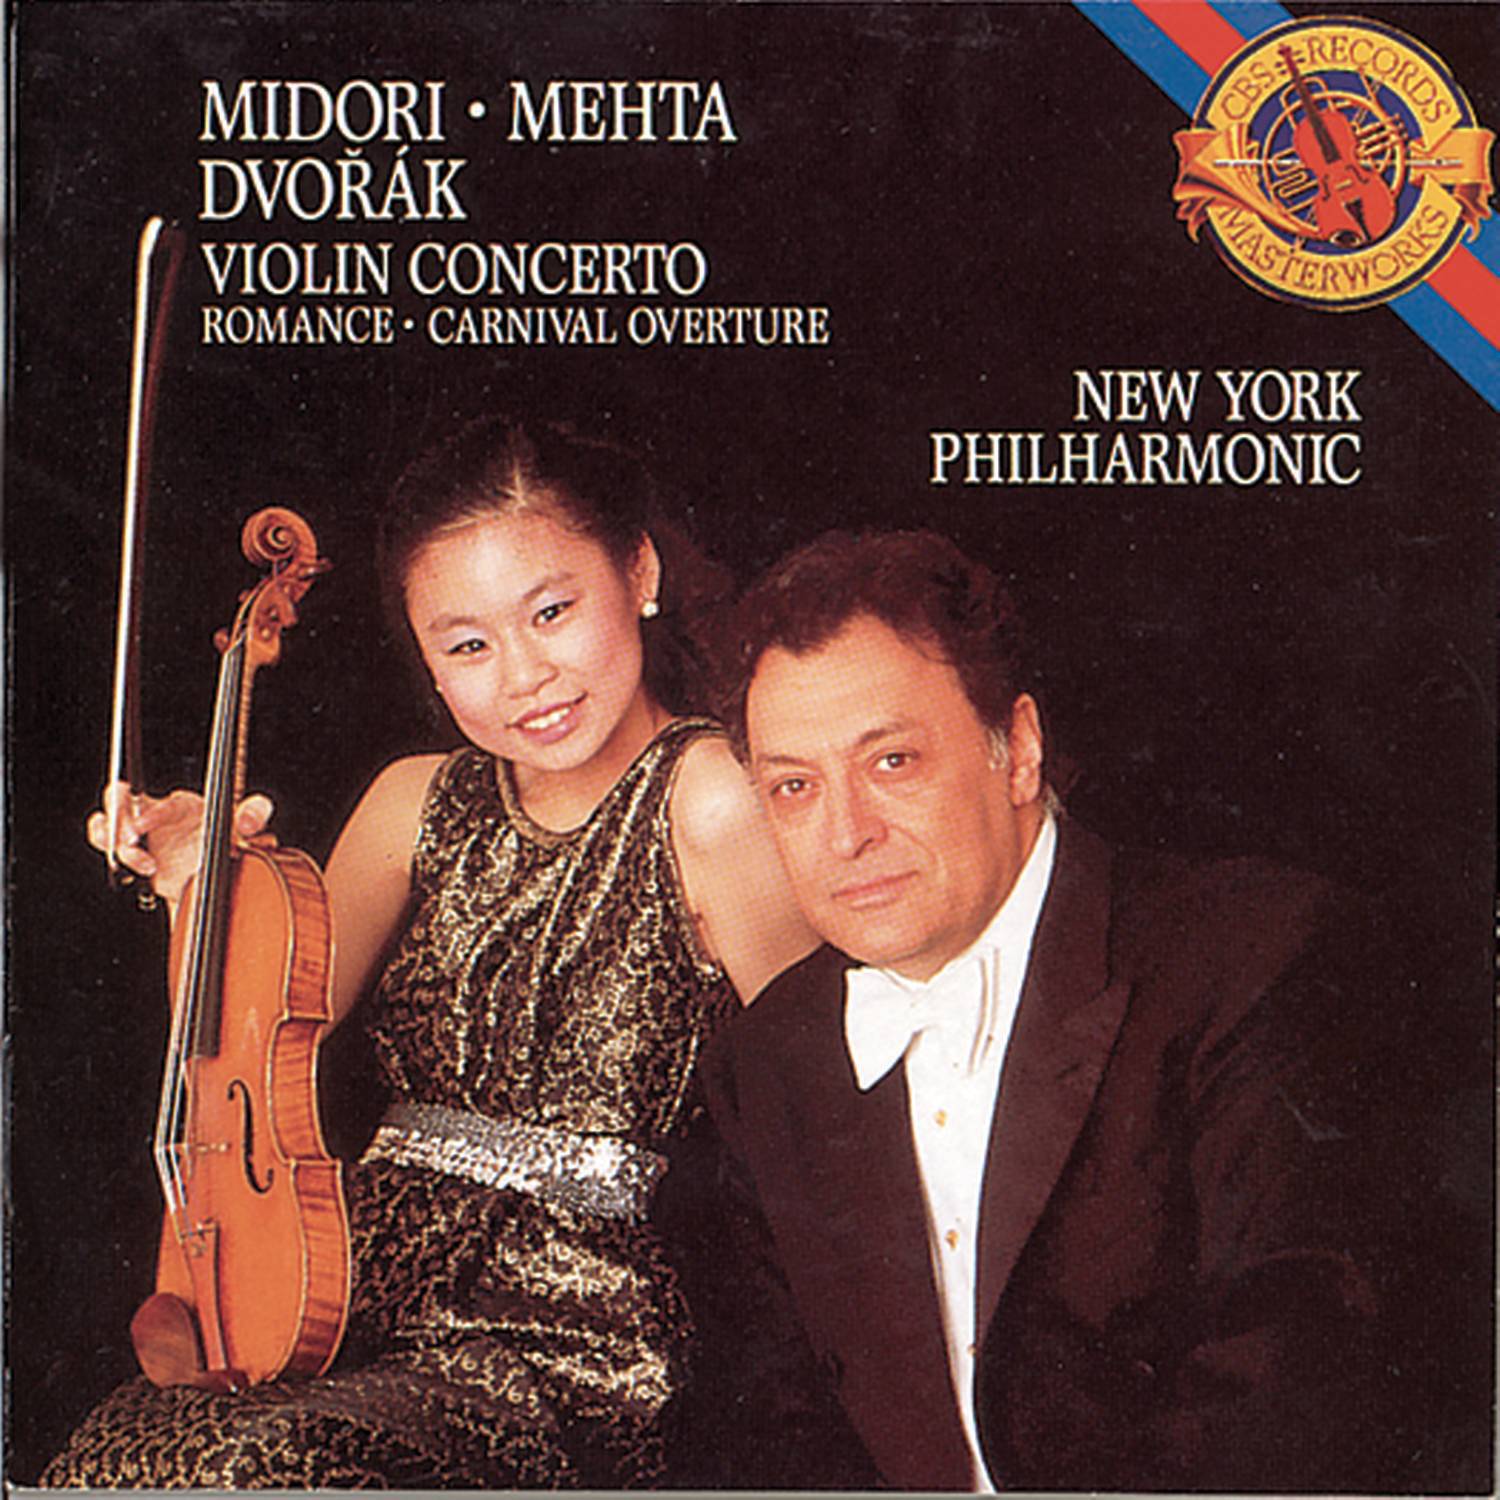 Dvora k: Violin Concerto, Romance and Carnival Overture